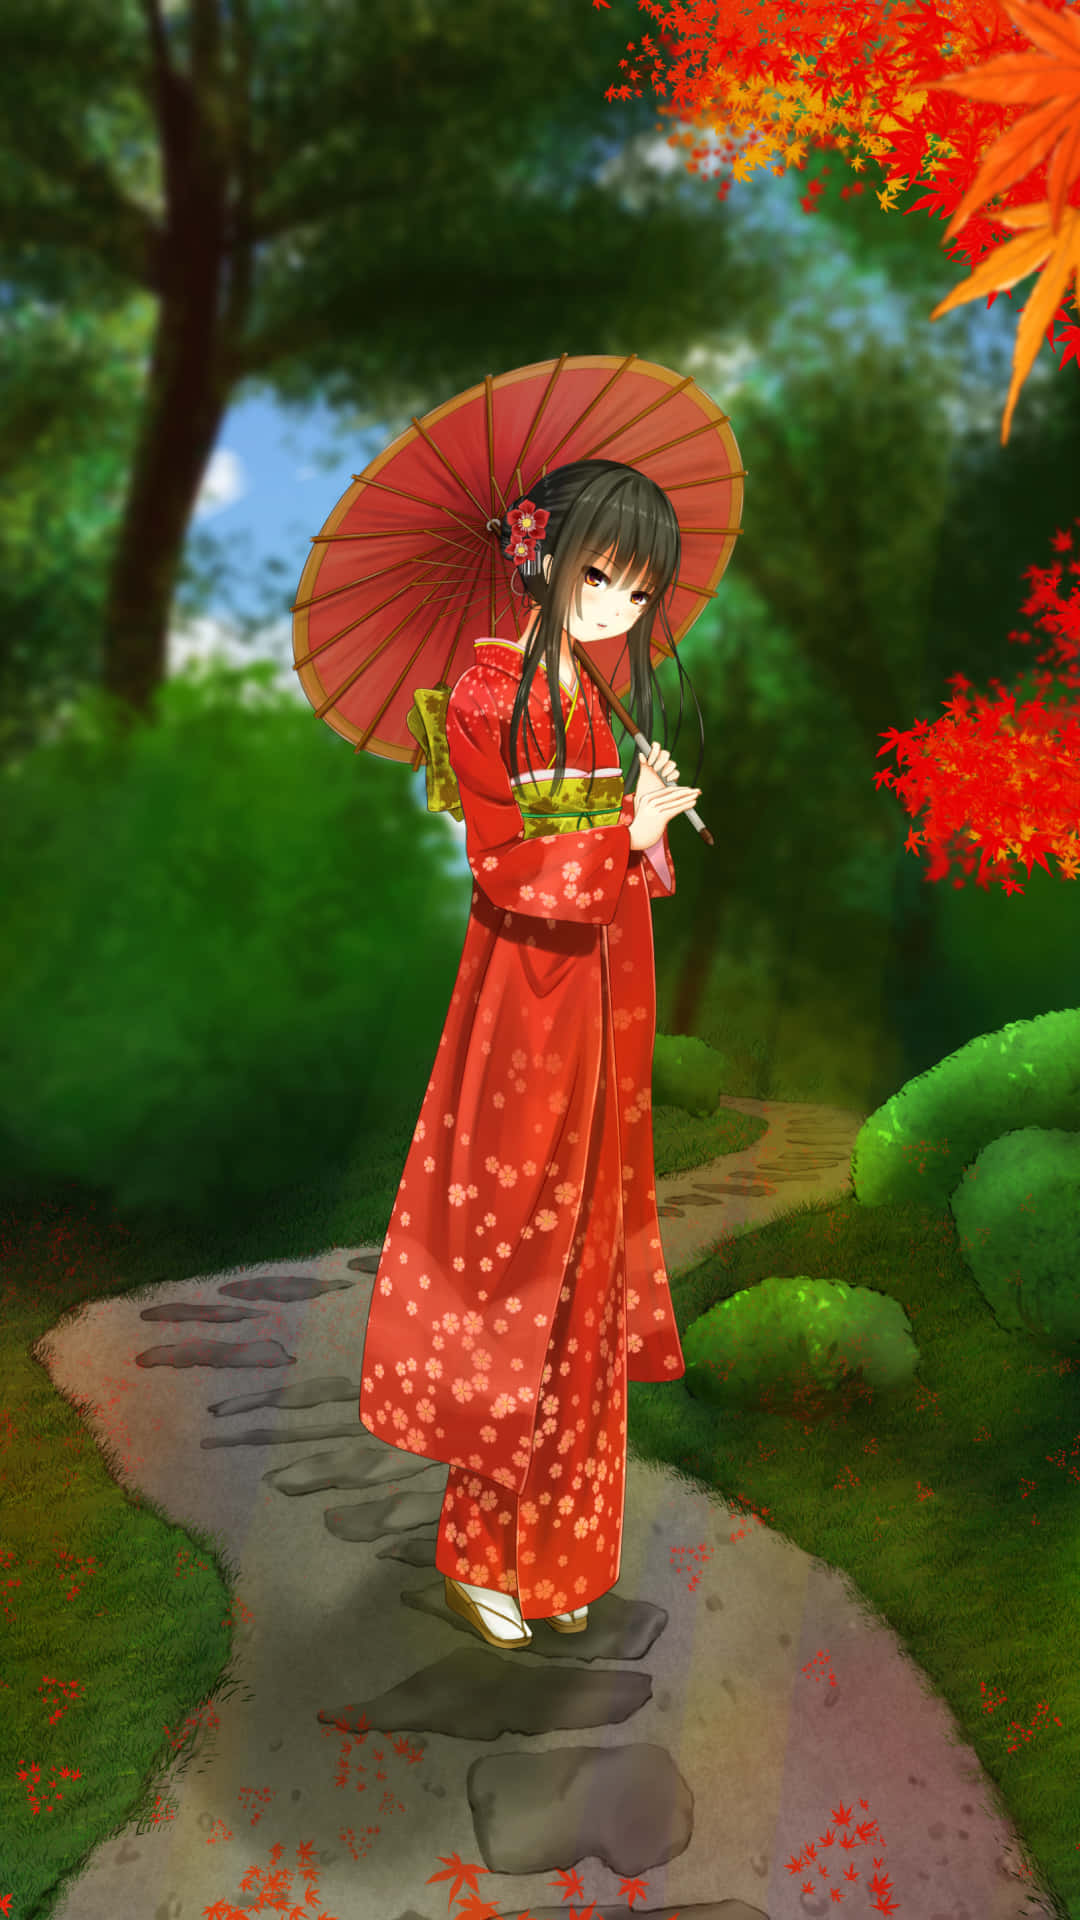 Fall Anime Girl With Umbrella Wallpaper